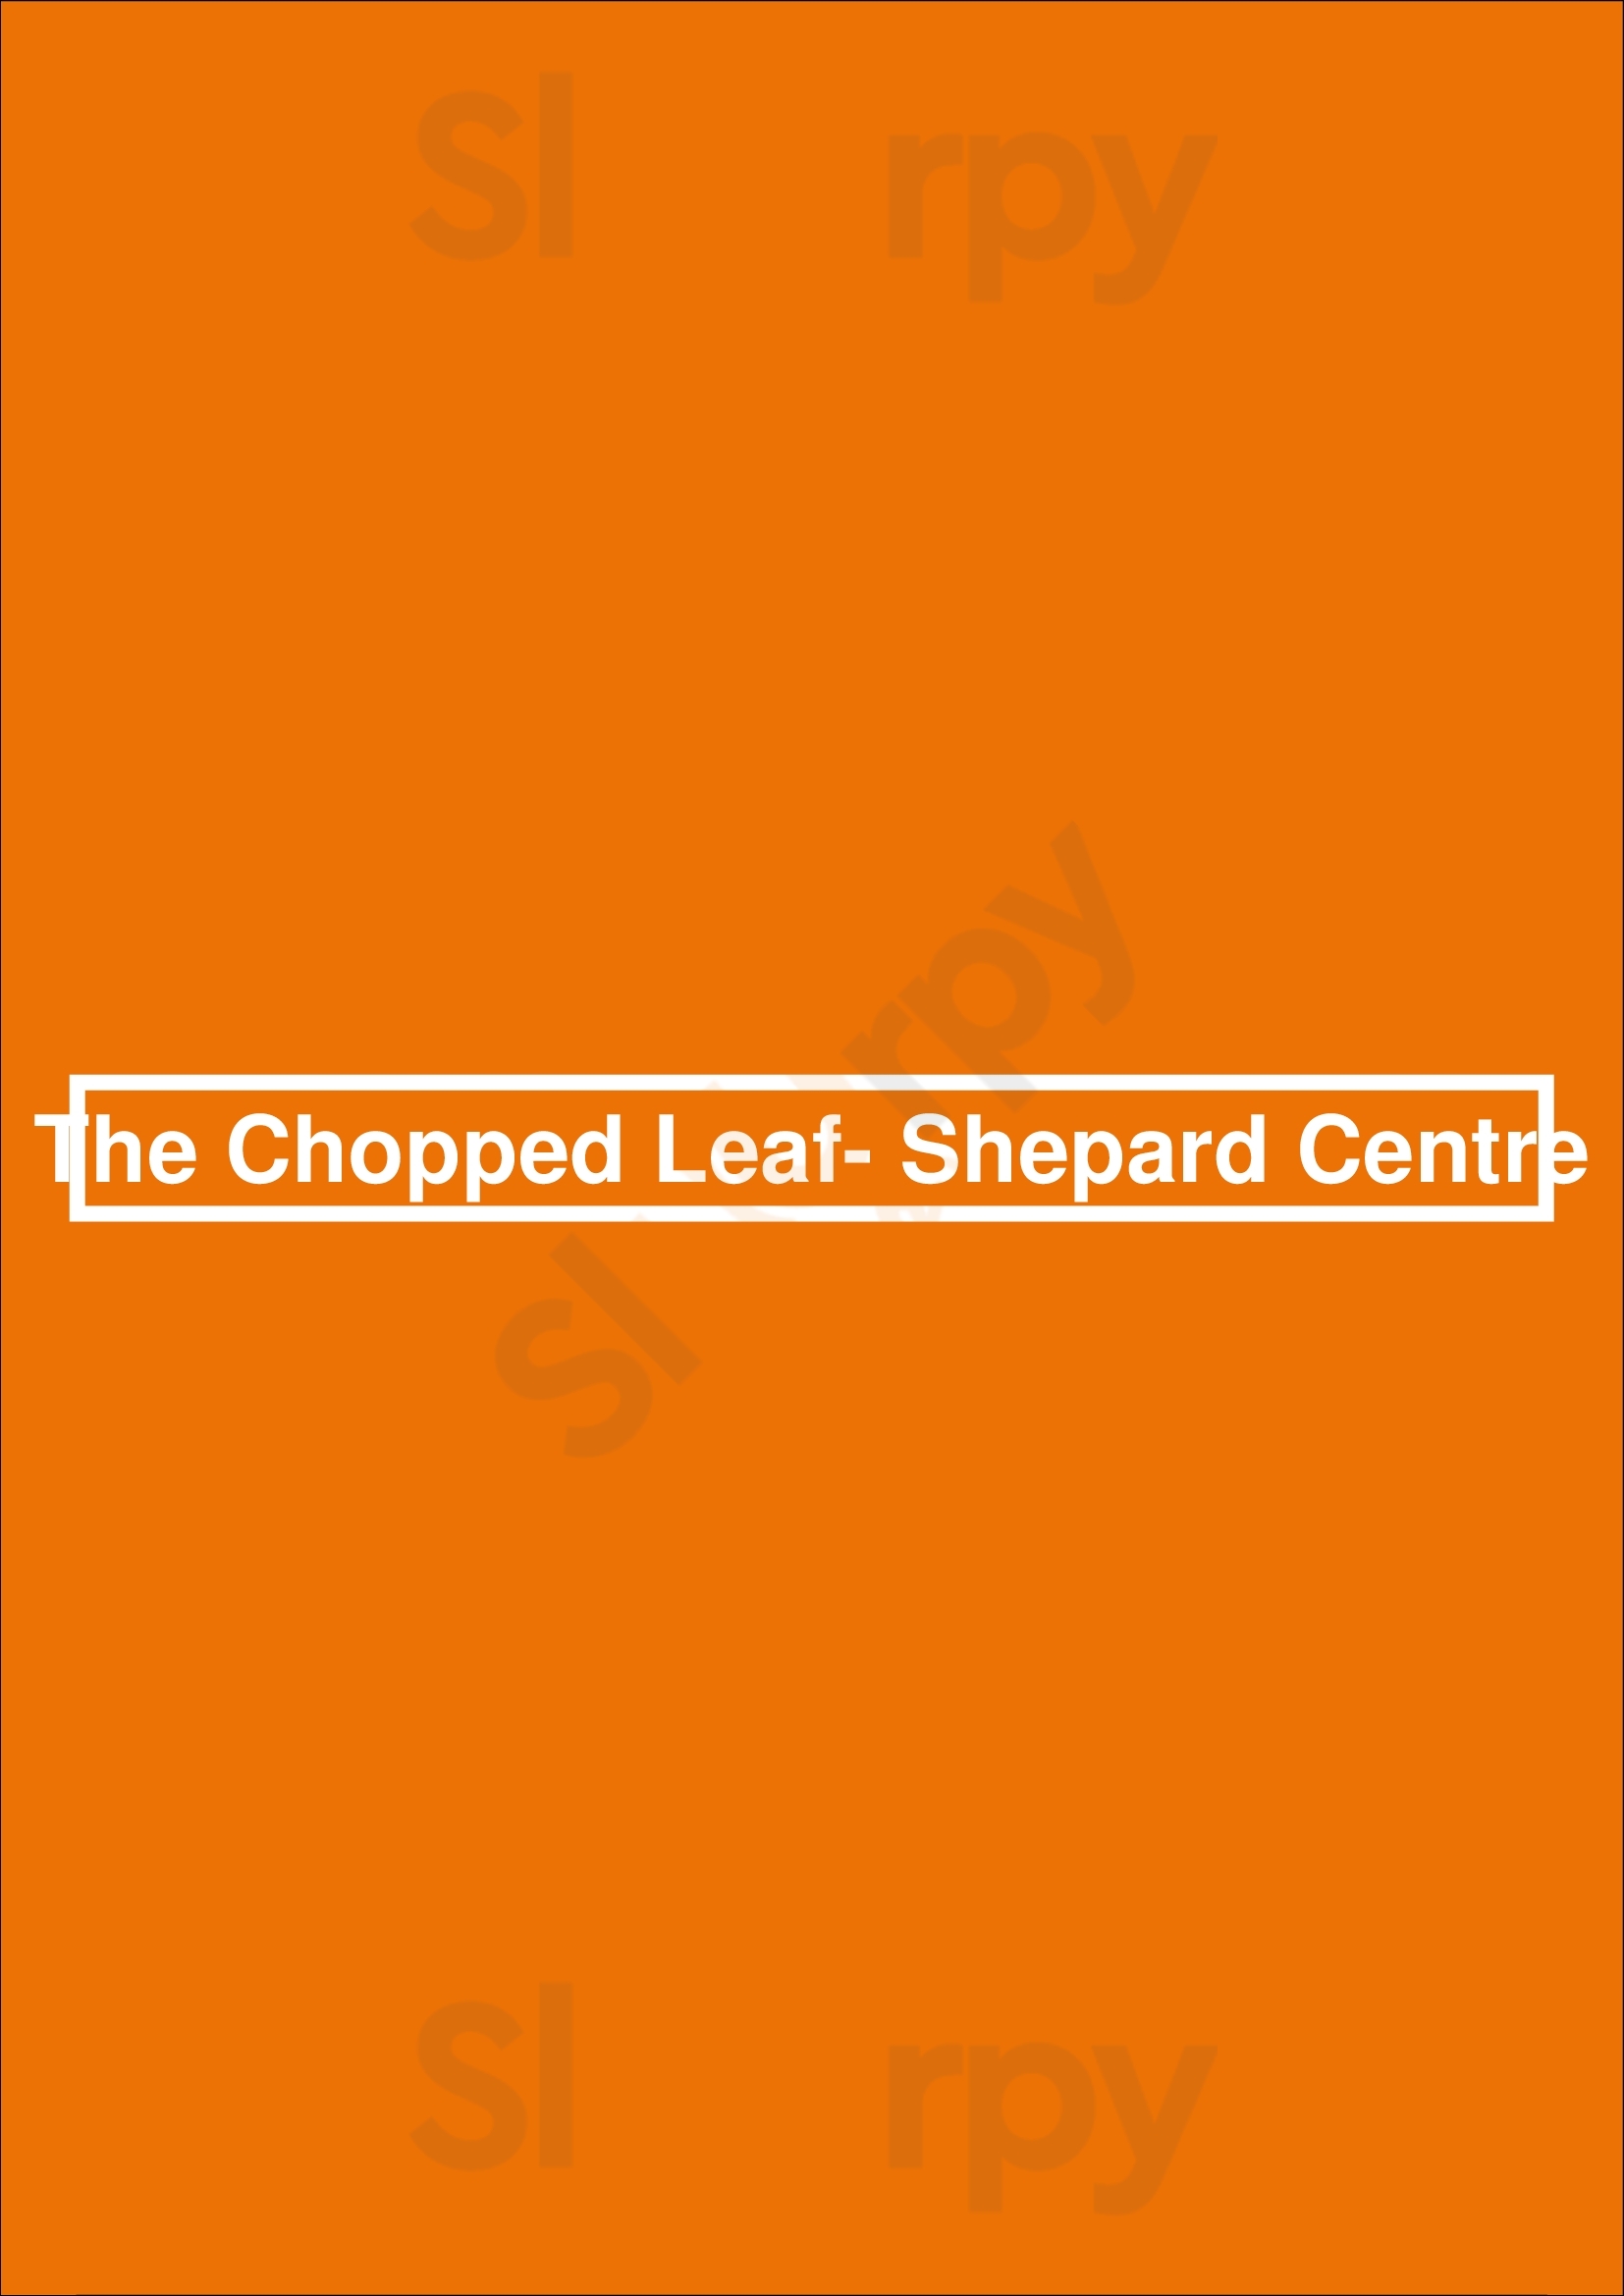 The Chopped Leaf- Shepard Centre Calgary Menu - 1